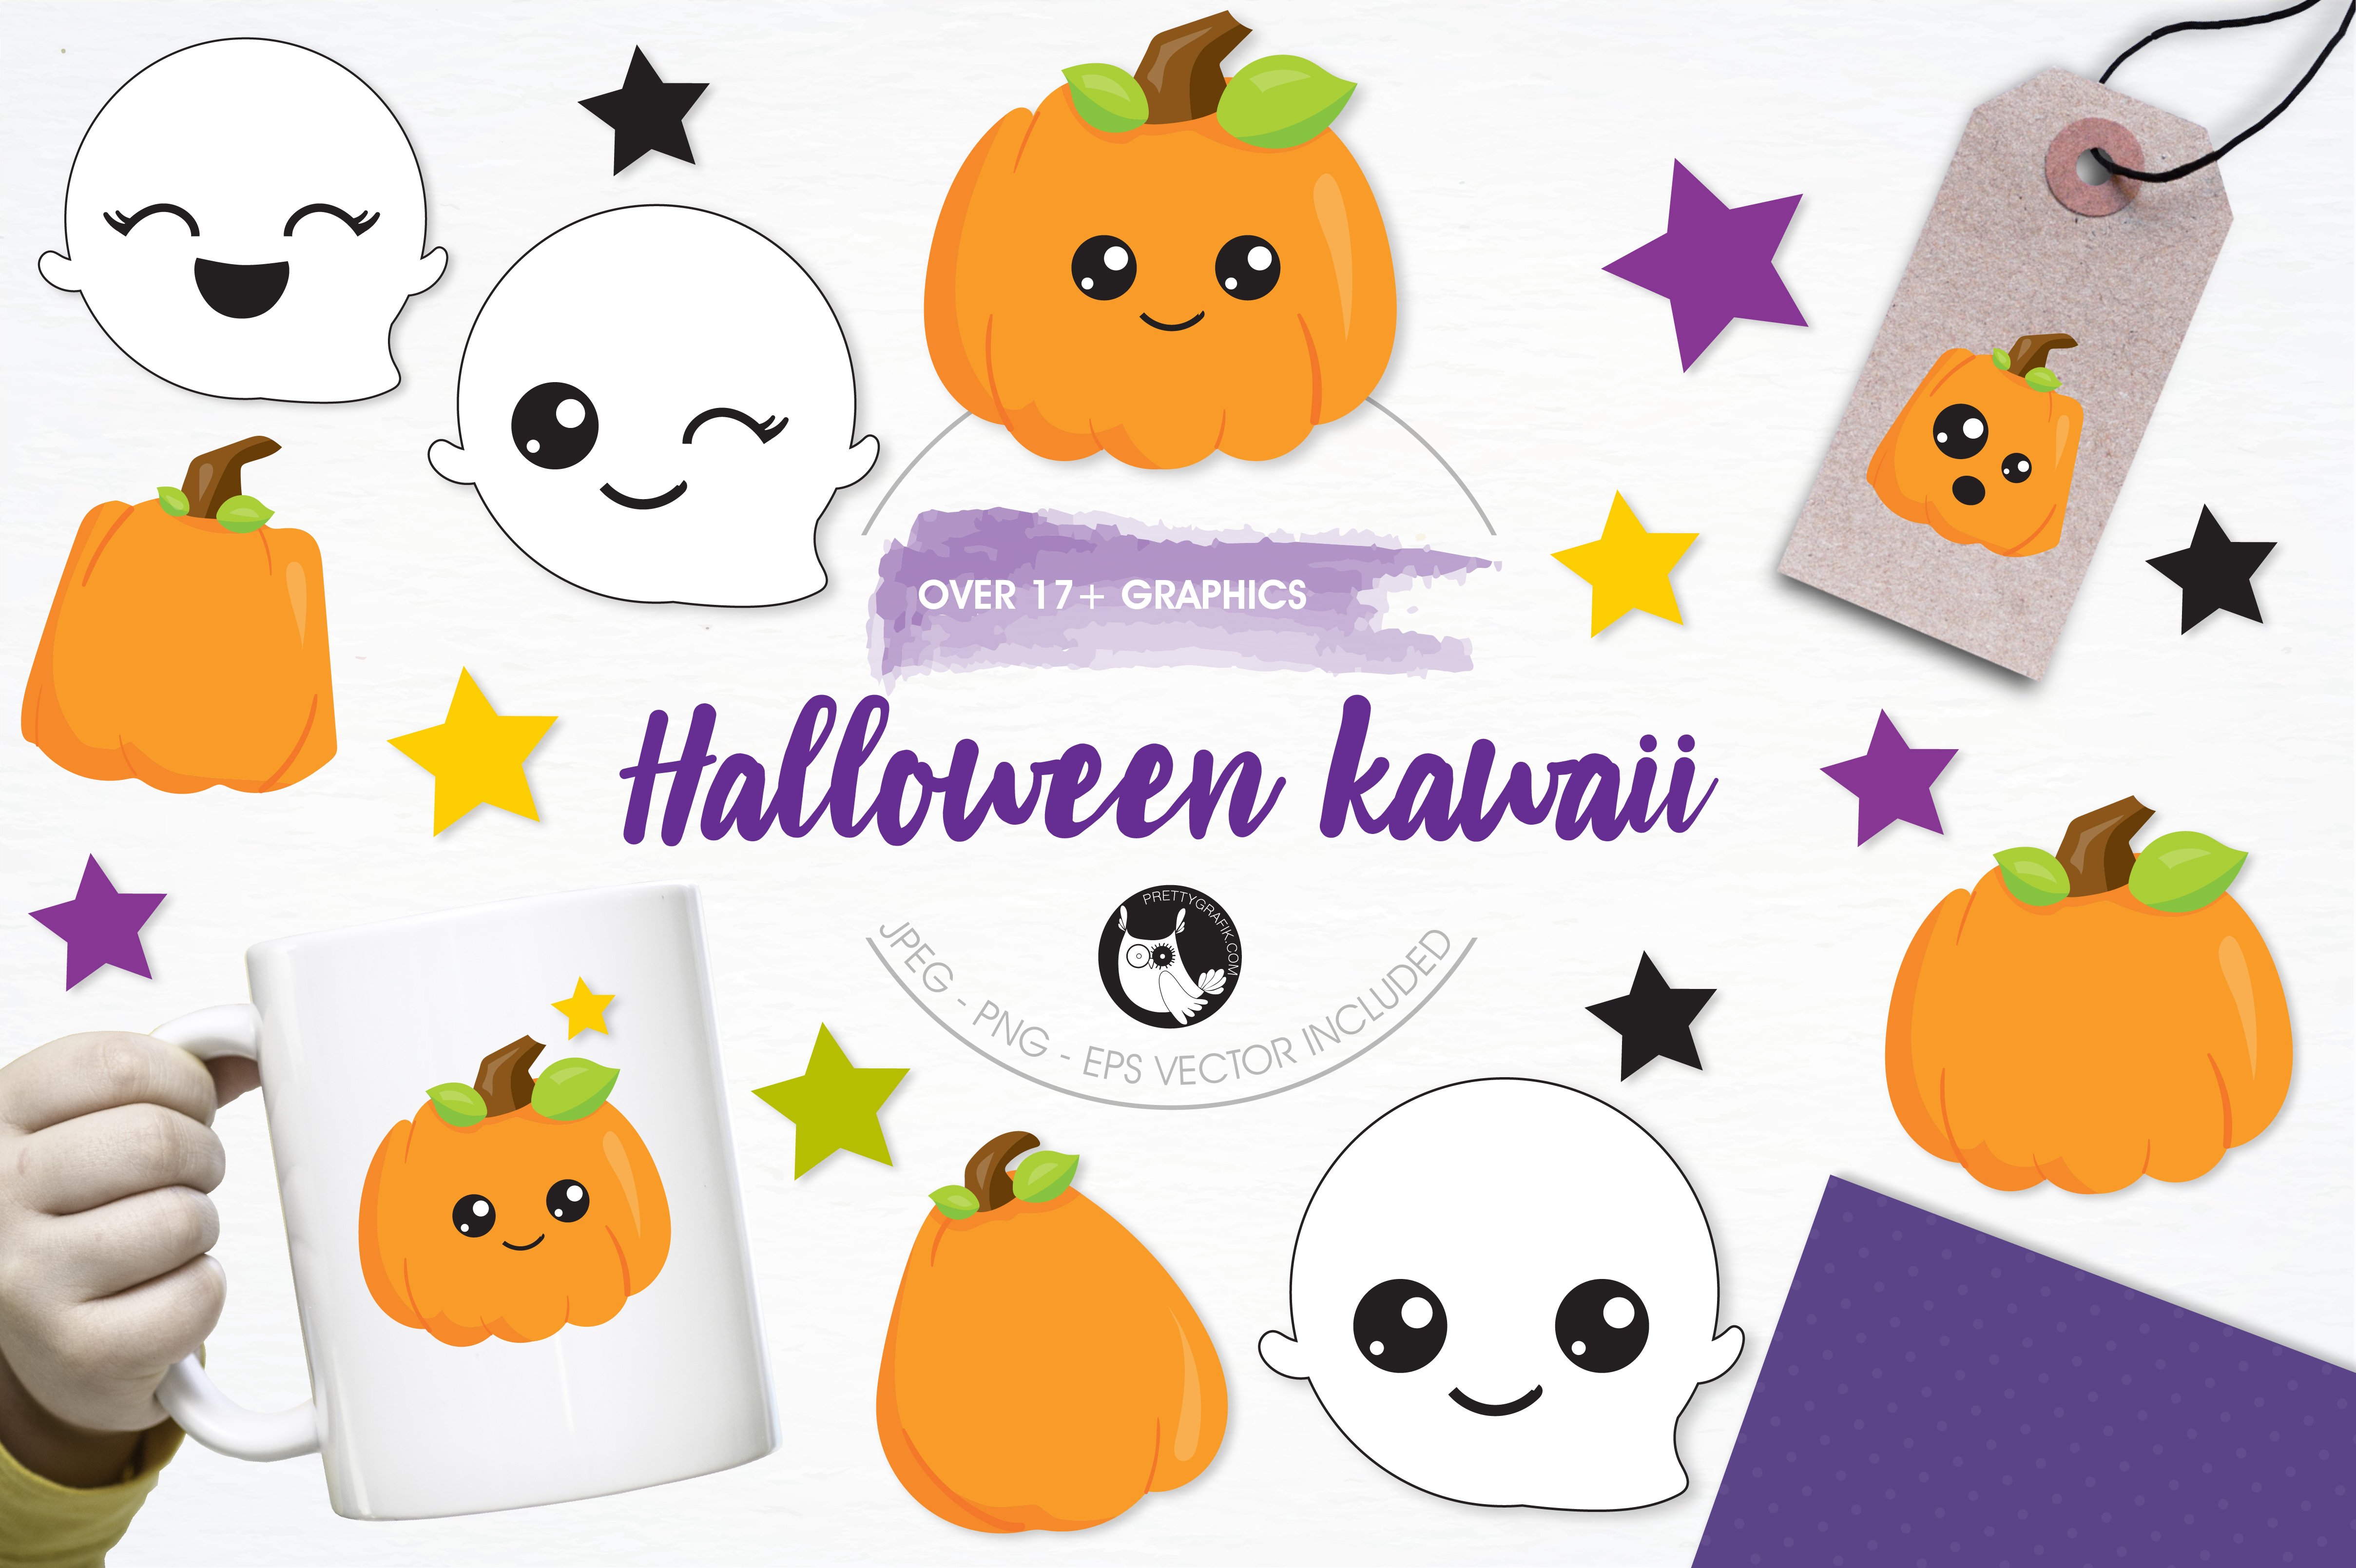 Halloween Kawaii Illustration Pack - Vector Image